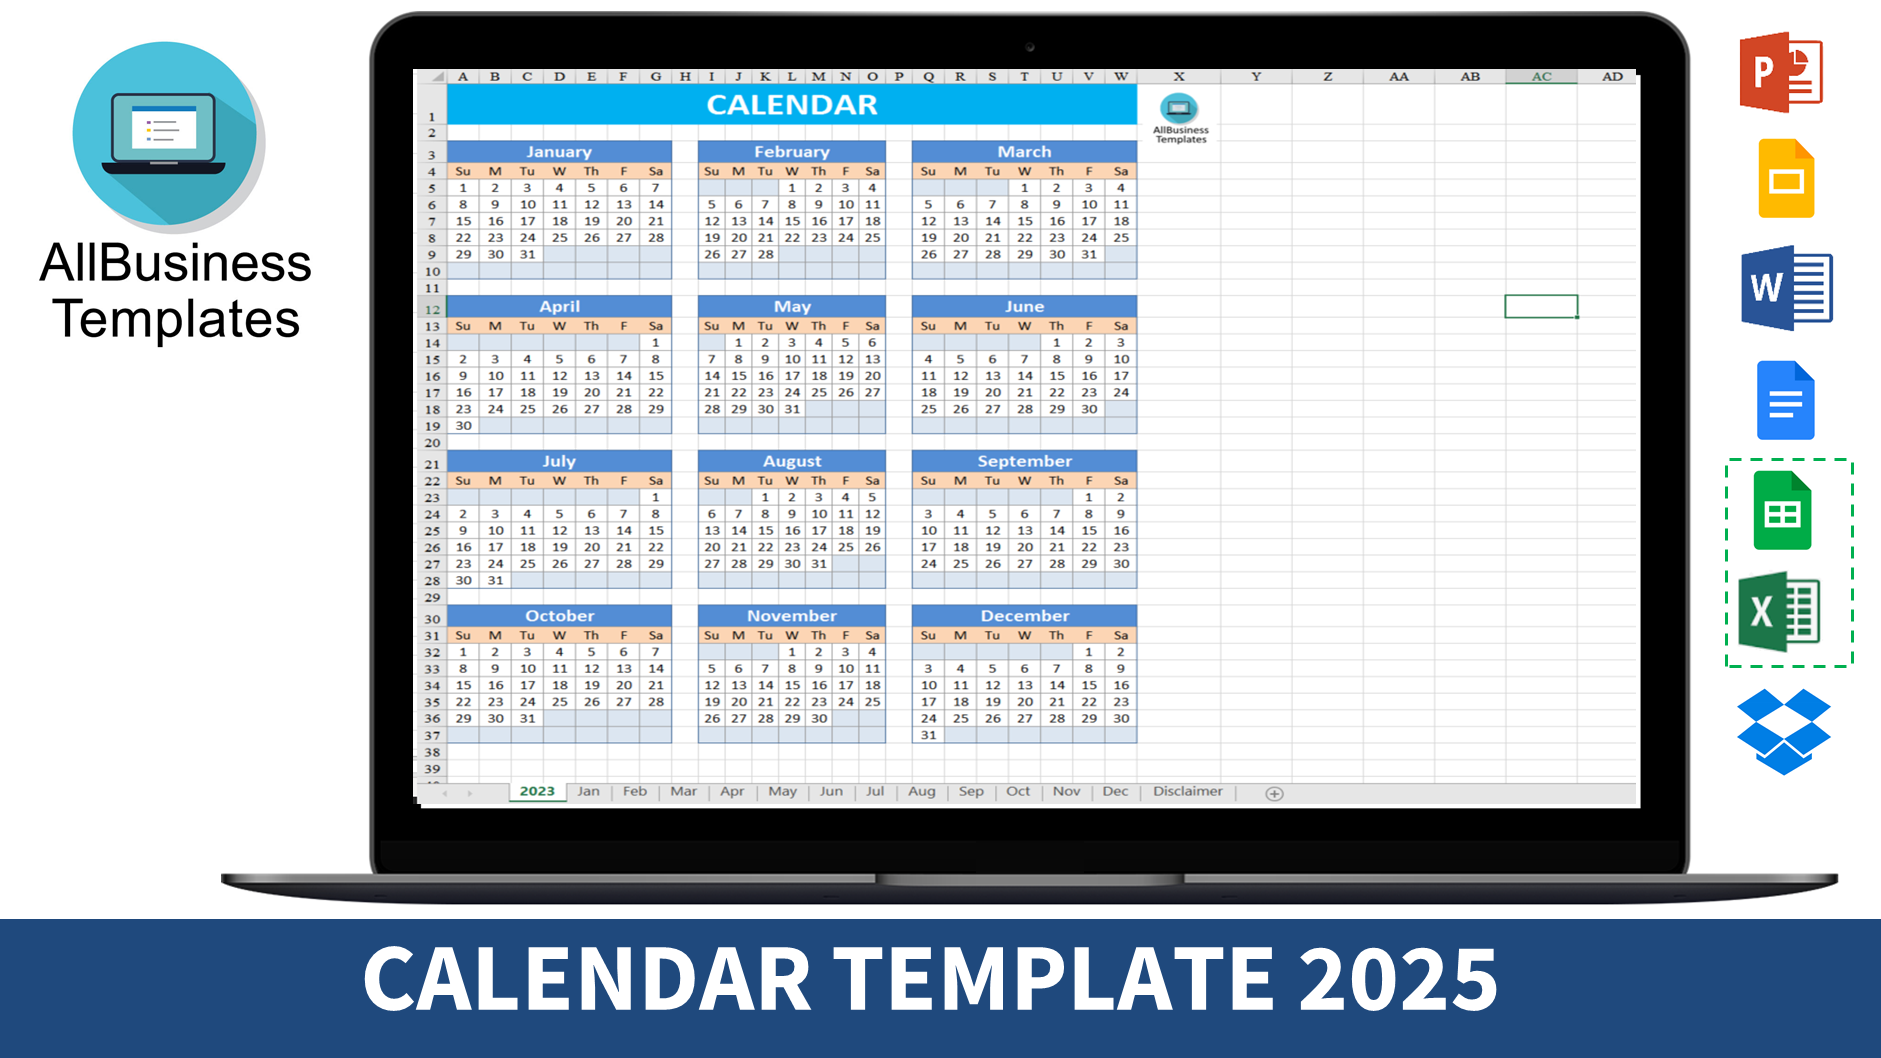 Calendar Template 2025 main image